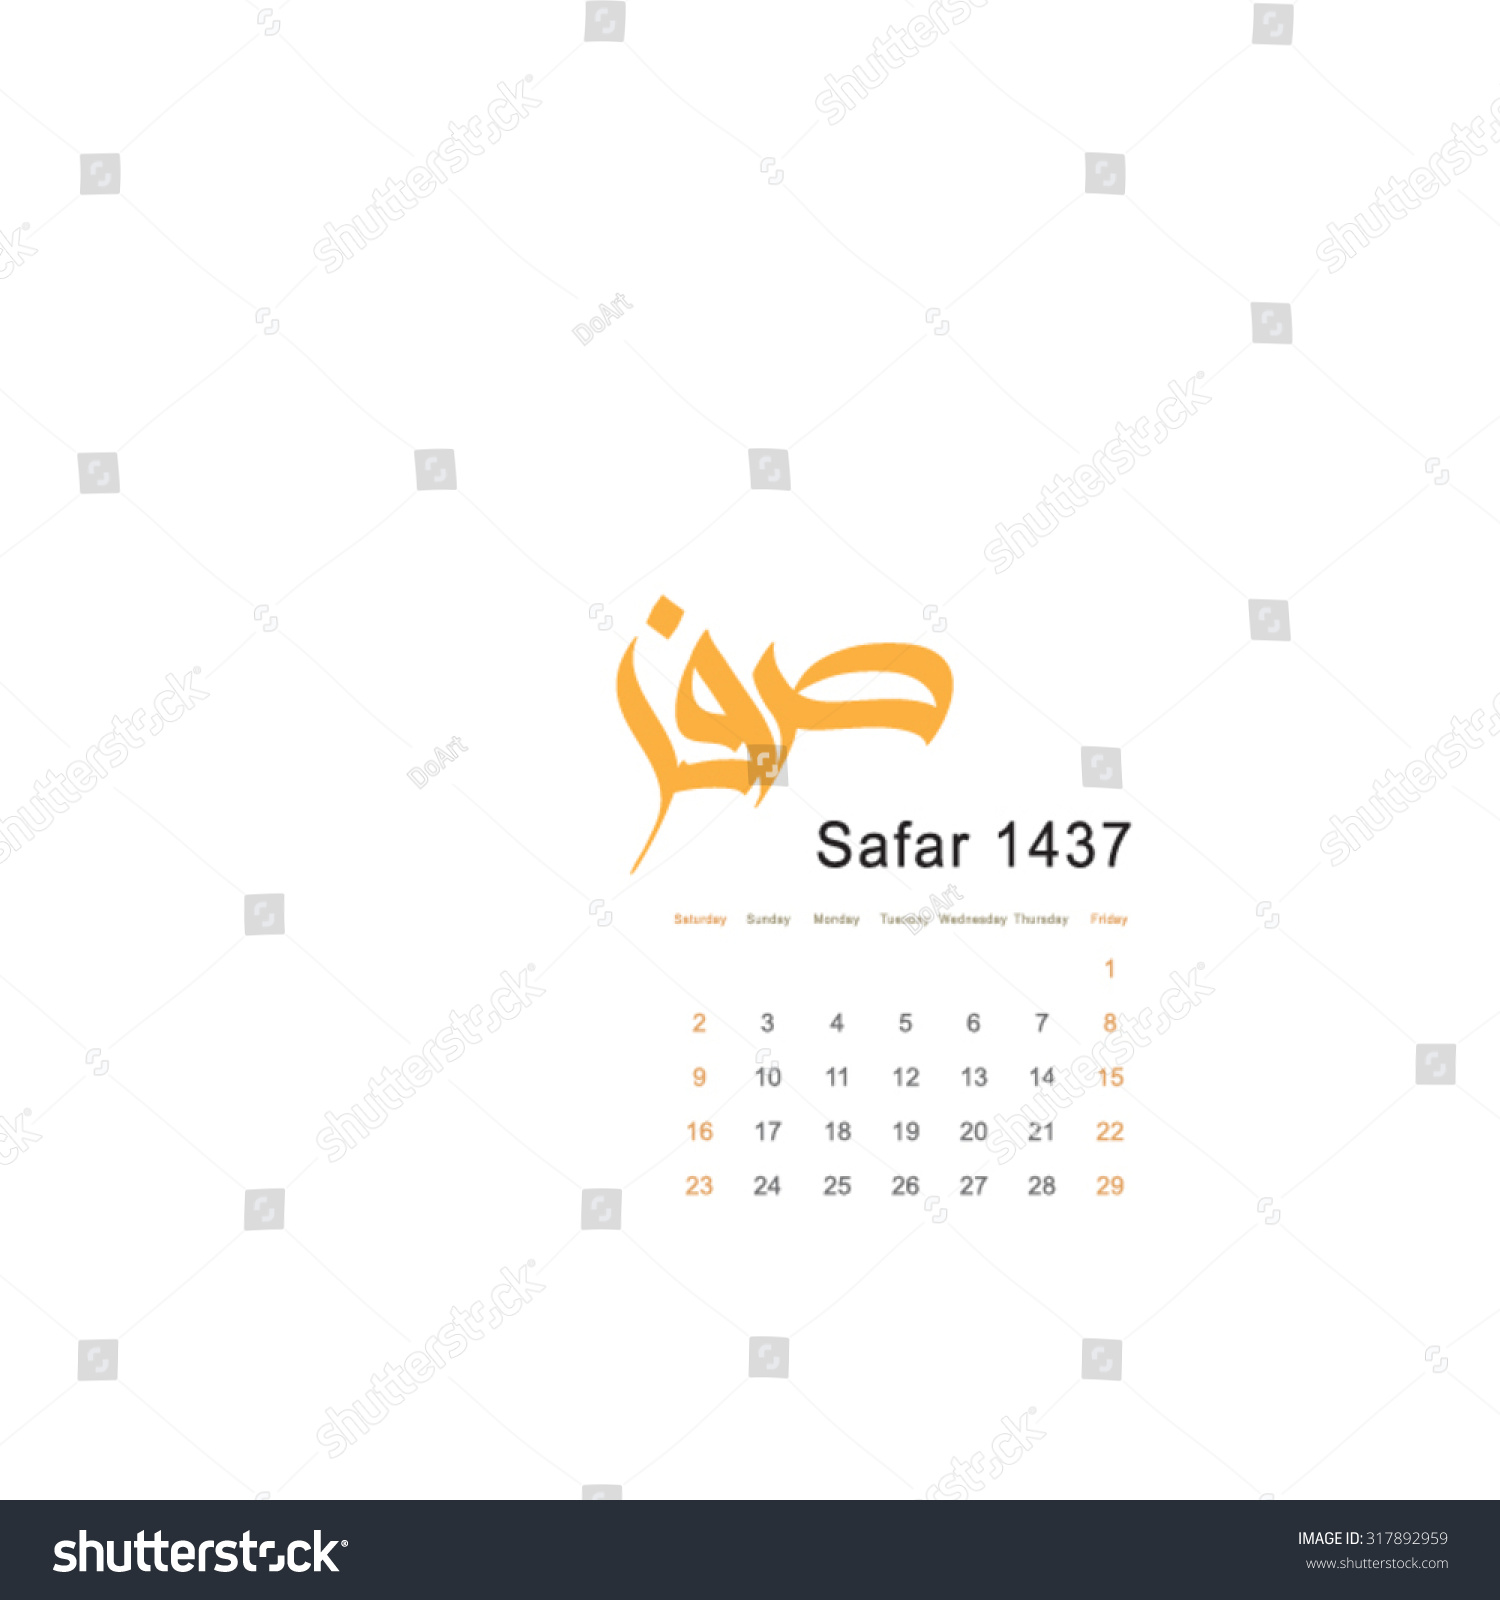 Safar 2nd Month Lunar Based Islamic Stock Vector (Royalty Free) 317892959